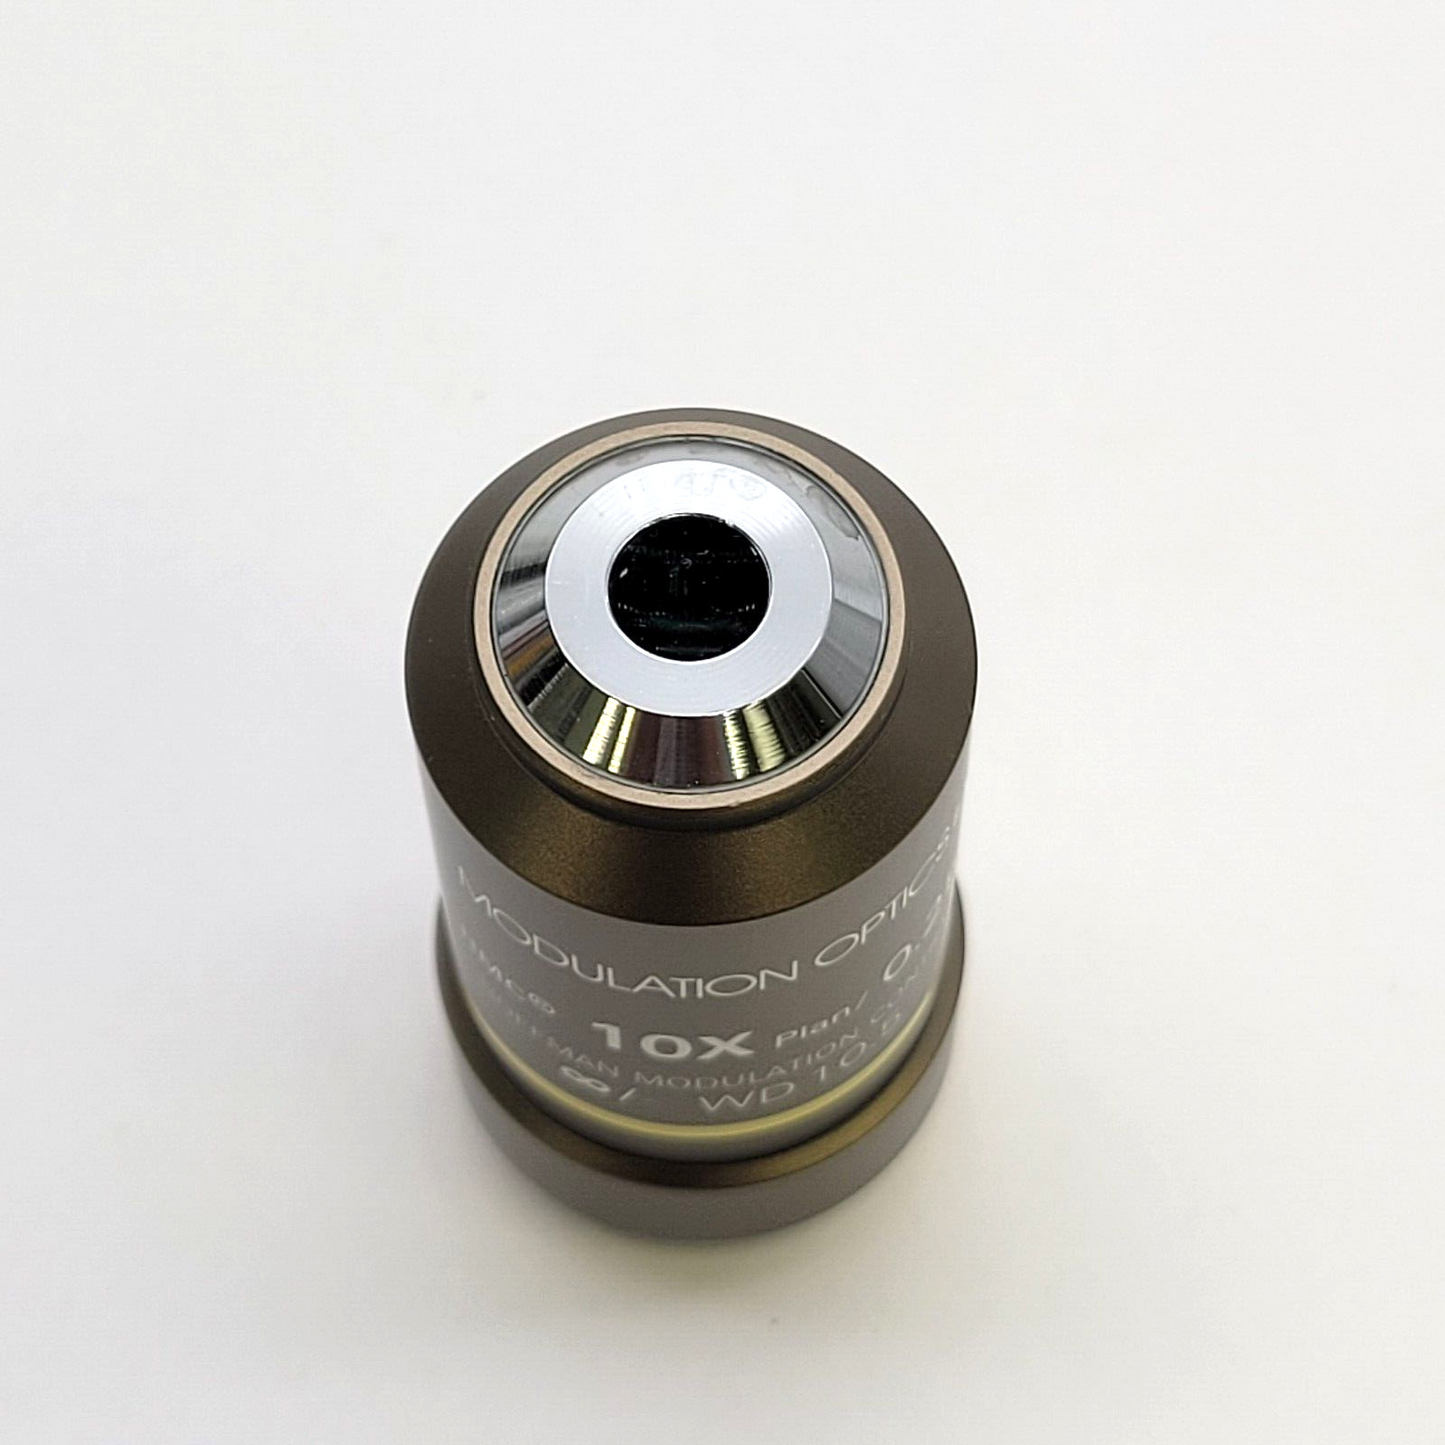 Nikon Microscope Objective Hoffman Modulation Contrast 10x HMC - microscopemarketplace